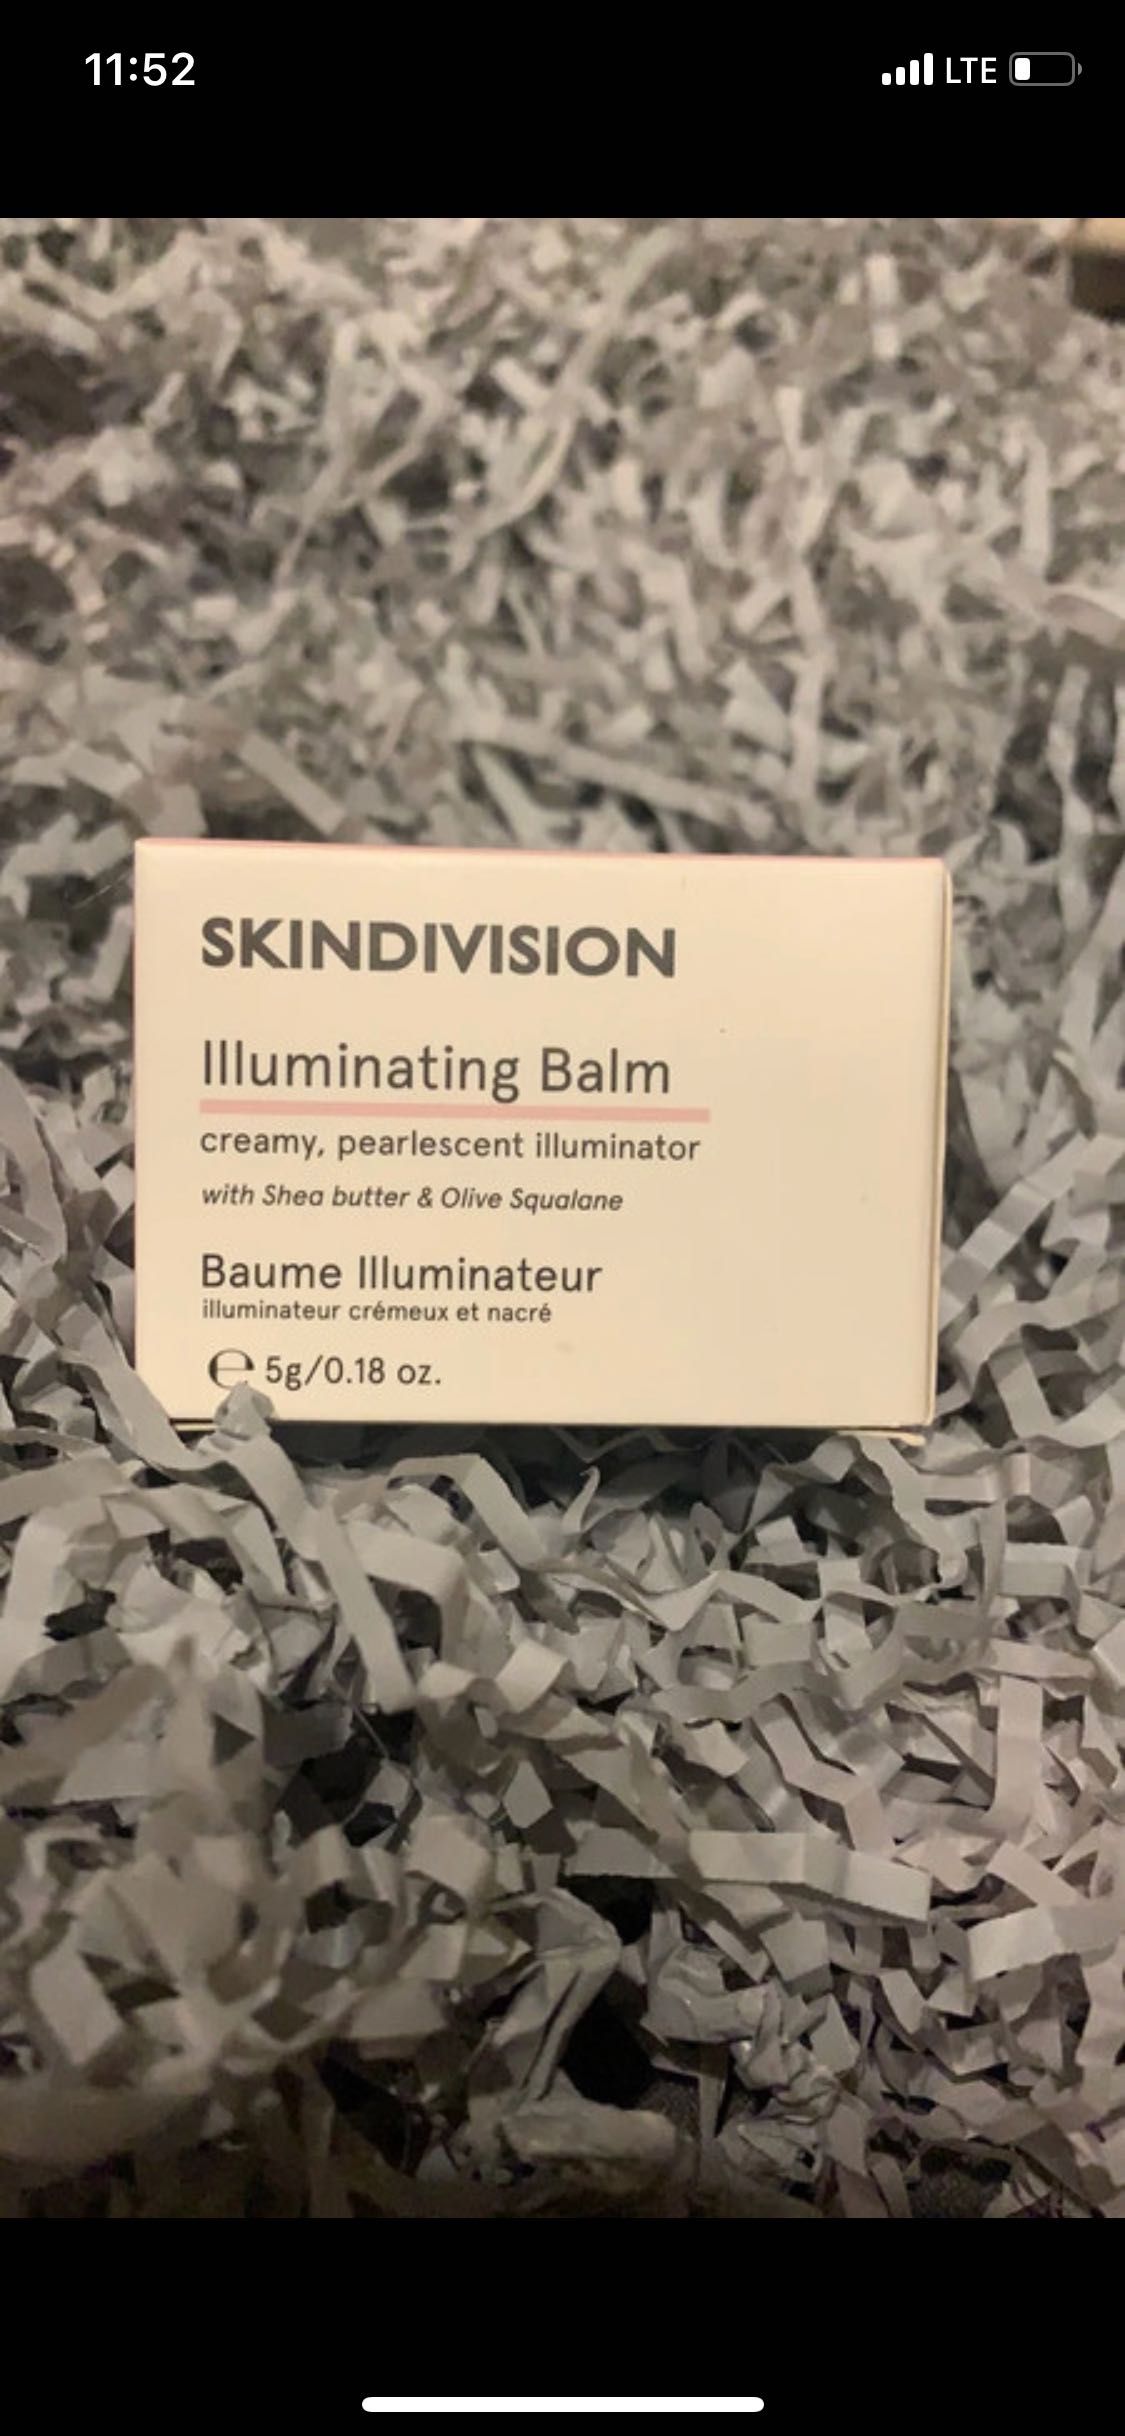 Skindivision illuminating balm